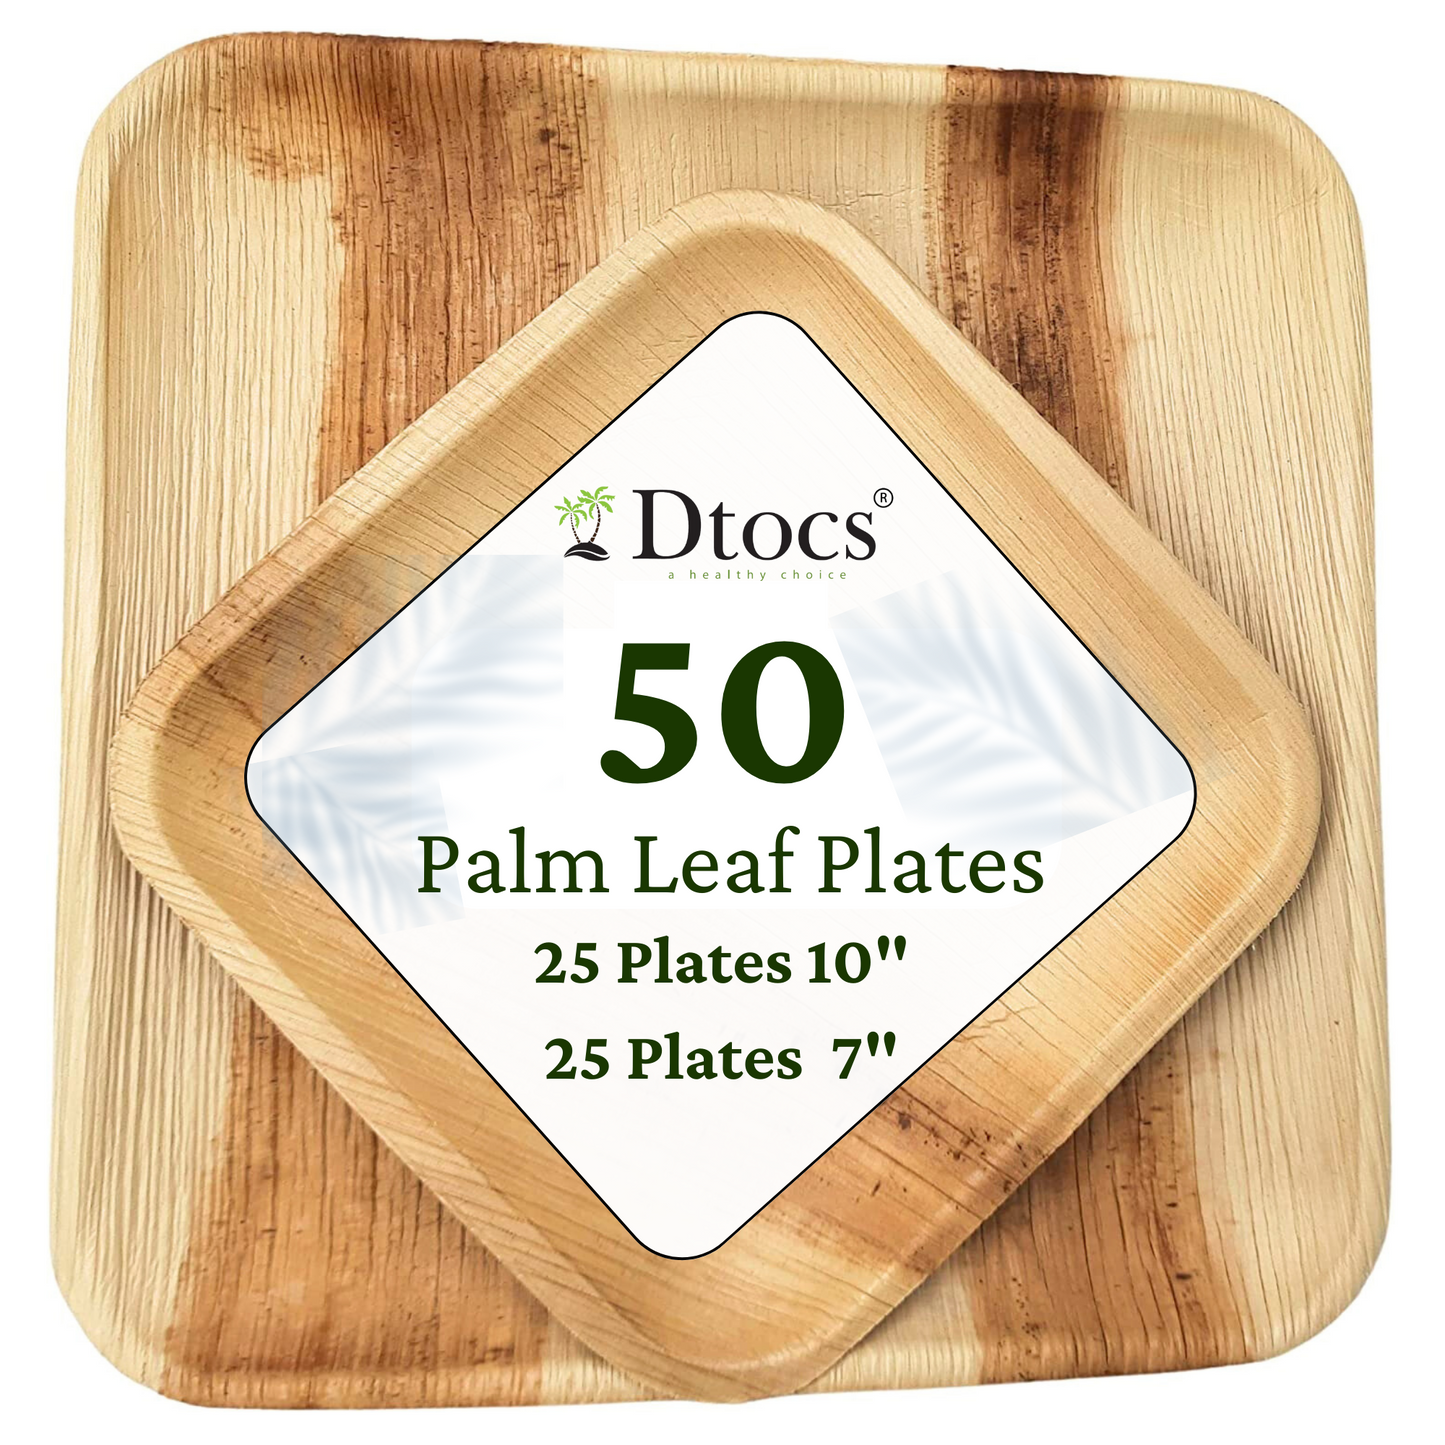 50 Party Plates | 10" Dinner (25), 7" Dessert (25) Square Palm Leaf Plates